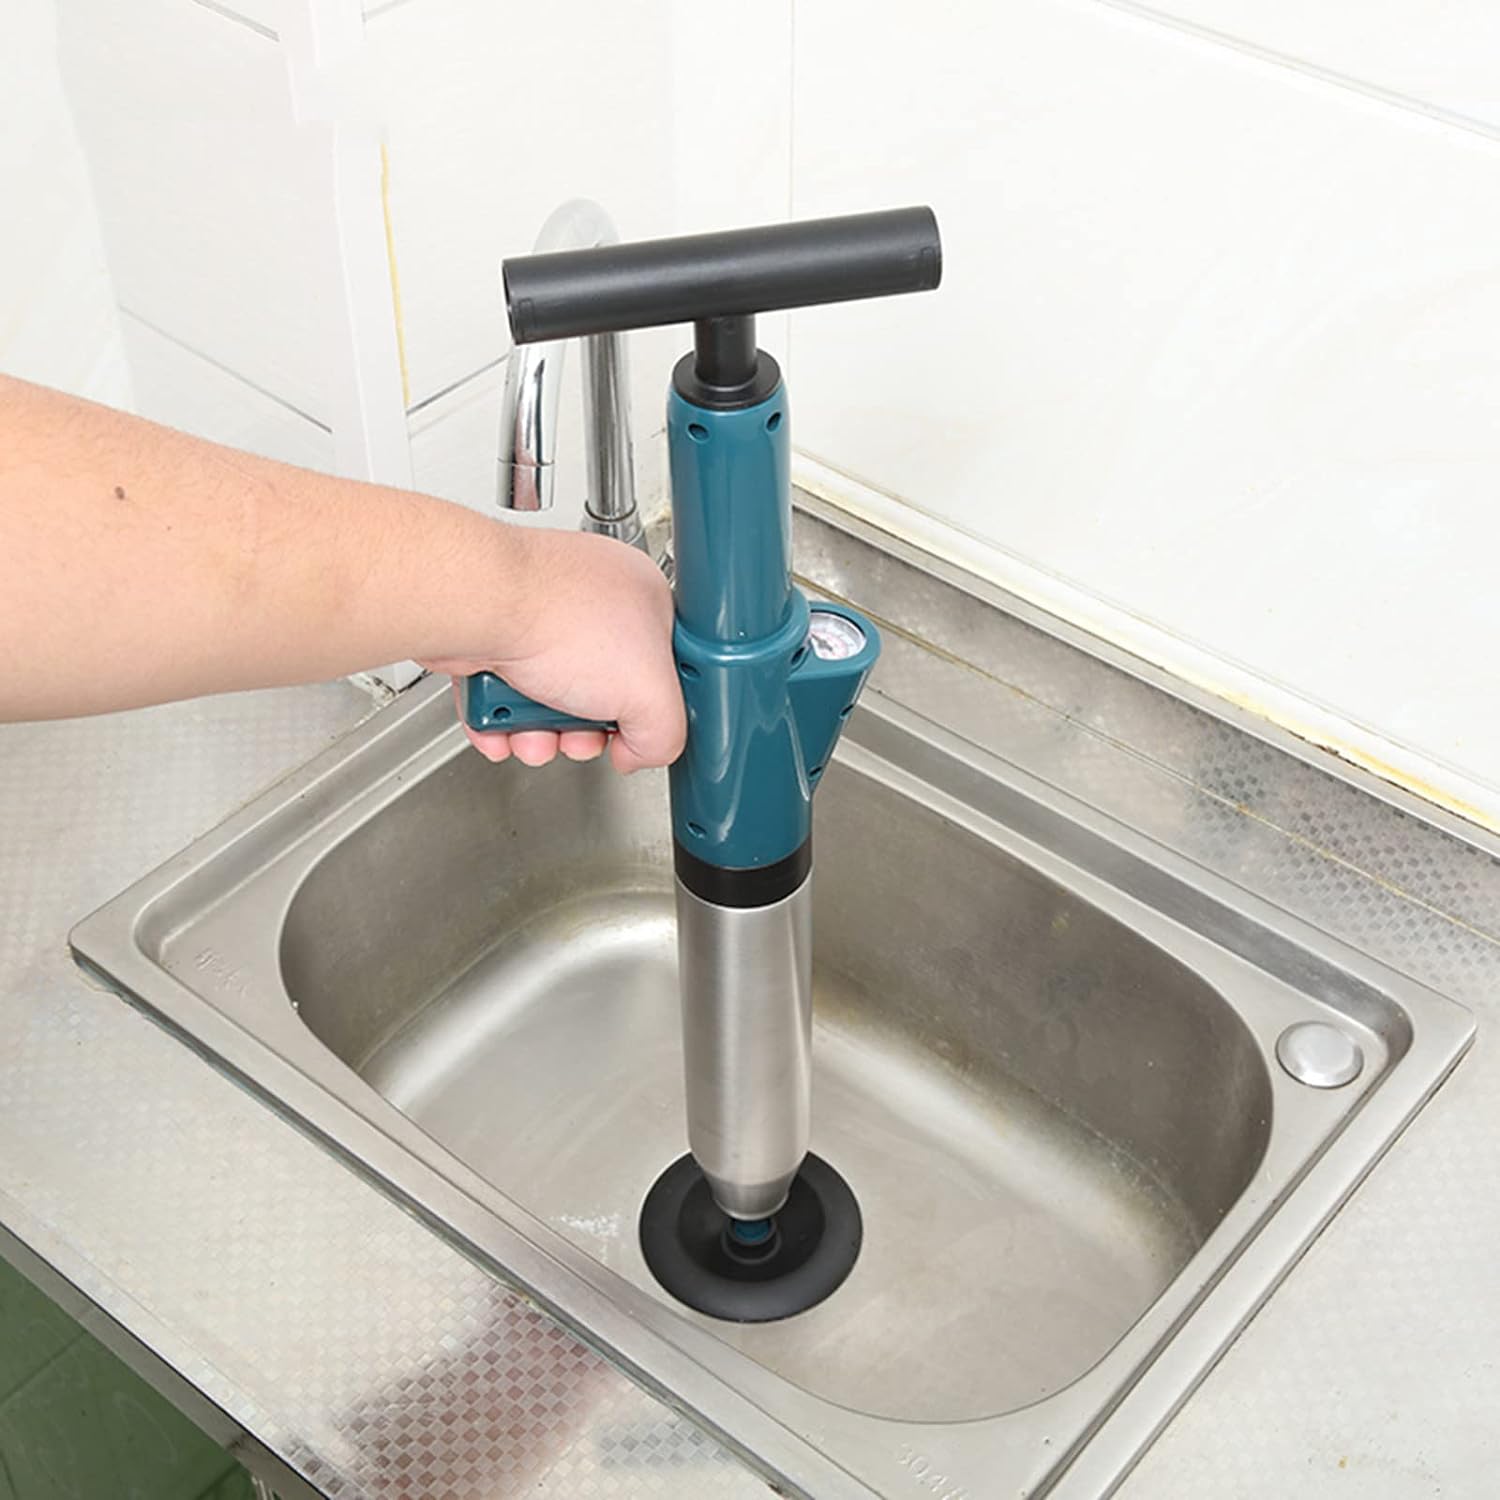 Erinaik 5 in 1 Toilet Plunger Kit Manual Drain Plumb Plunger Power Plungers Set High Pressure Air Plunger for Toilet for Kitchen Bathro